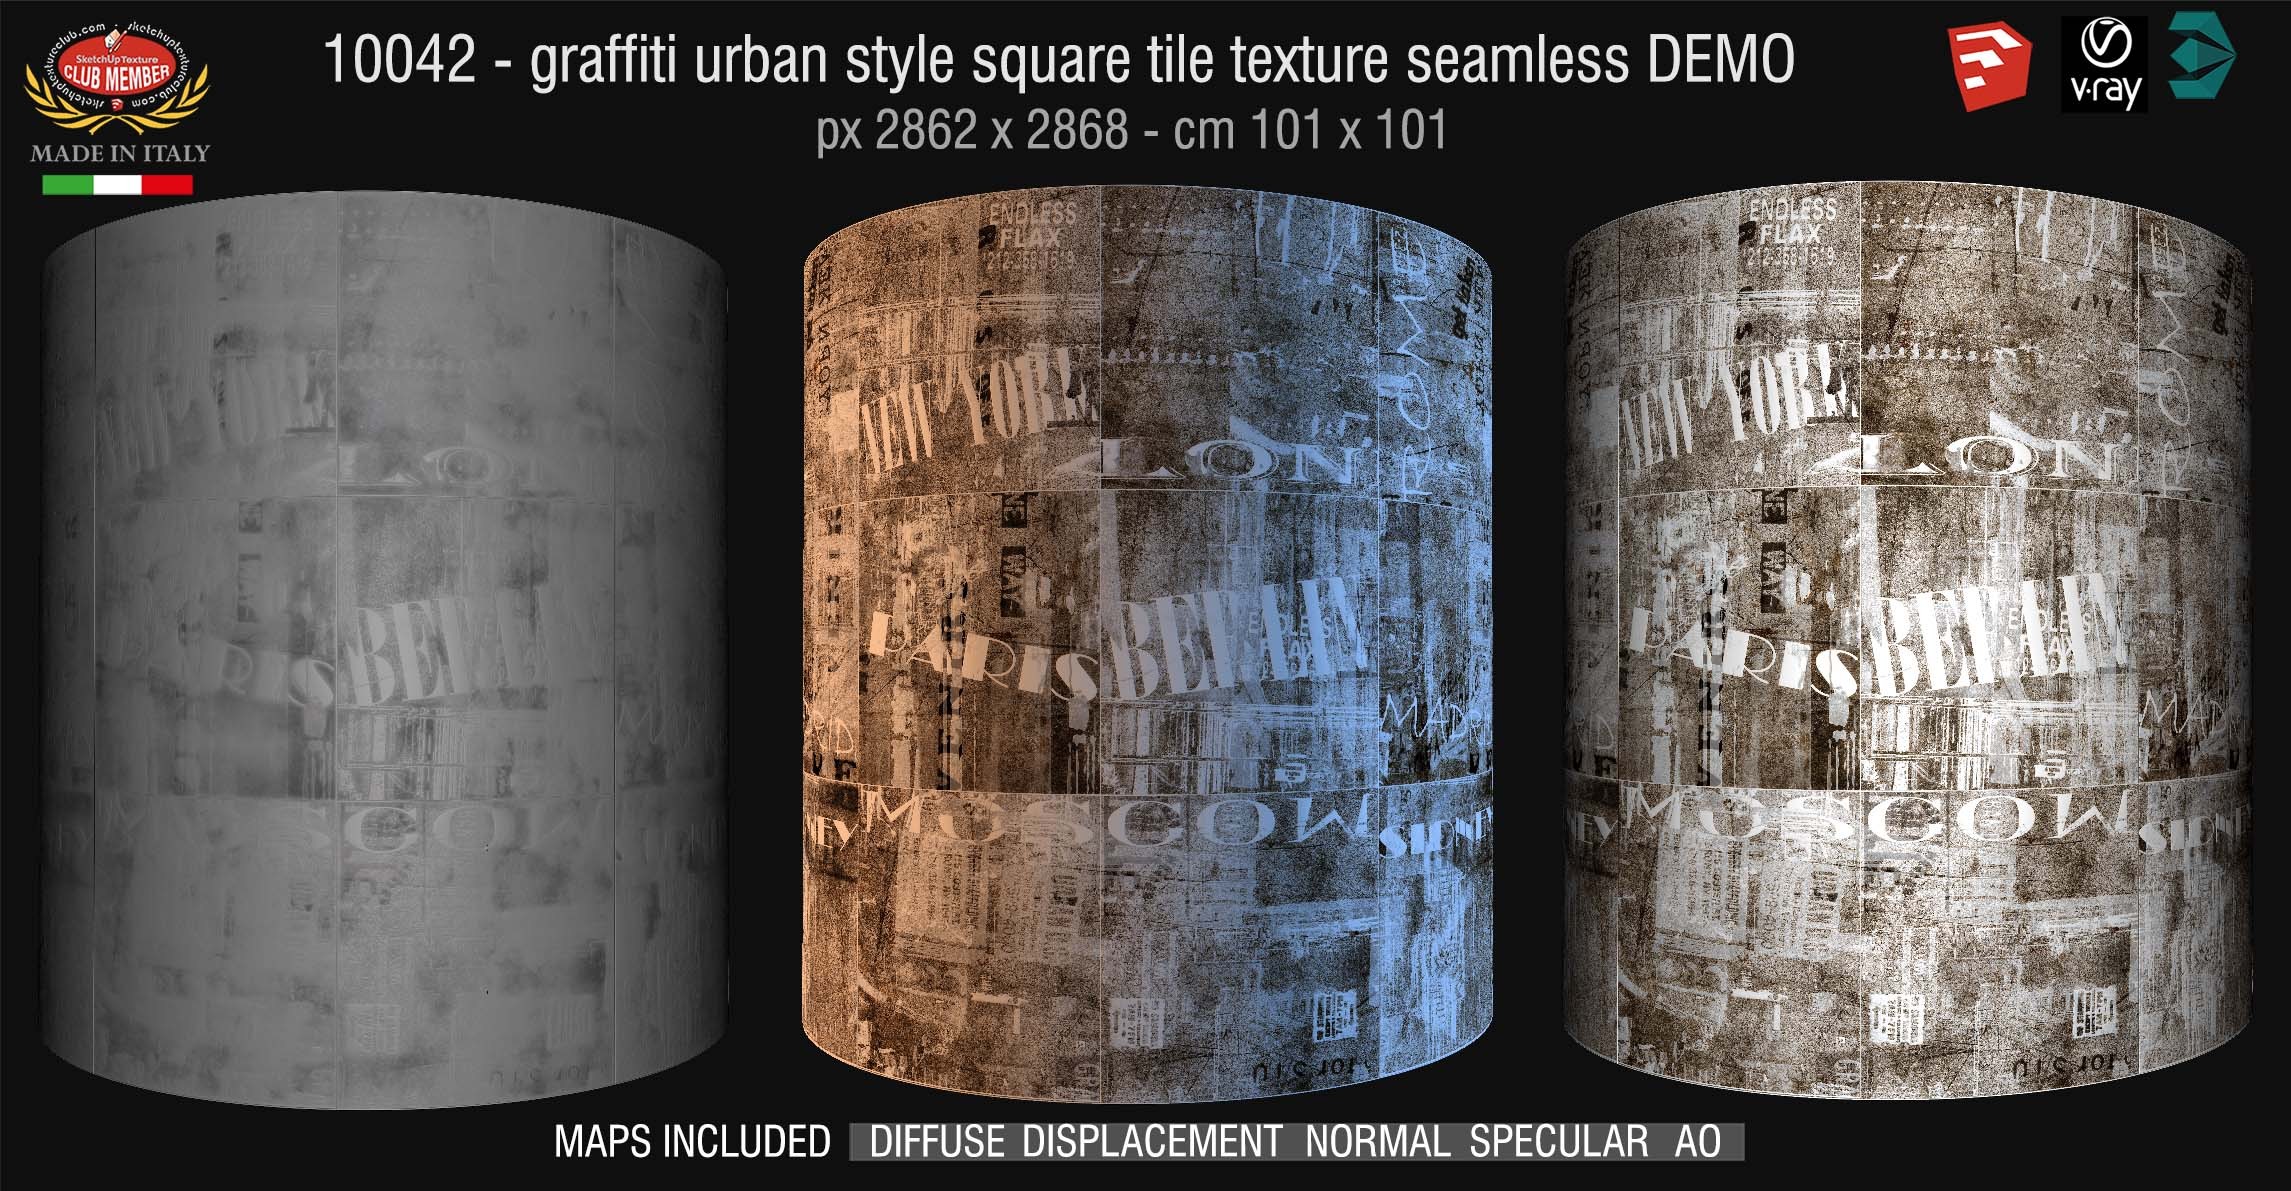 14042 HR Graffiti urban style square tile texture seamless + maps DEMO